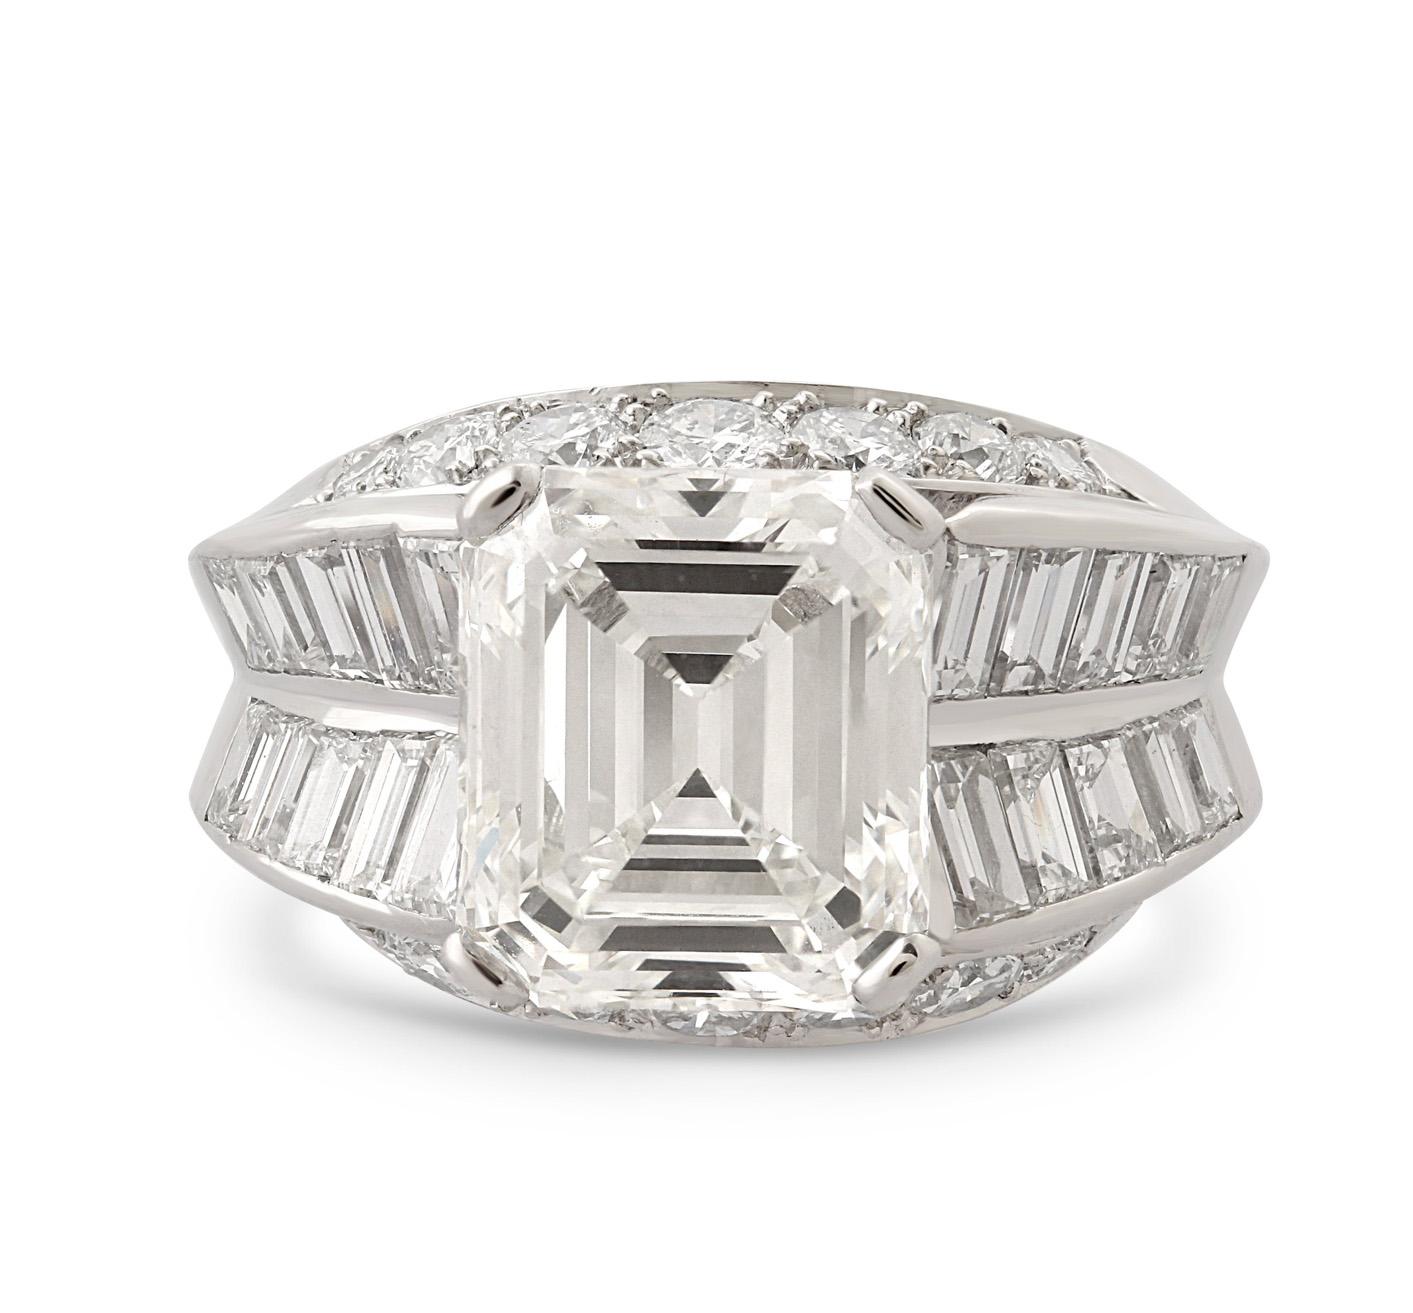 Emerald Cut 5.28 Carat Step-Cut Diamond Ring For Sale